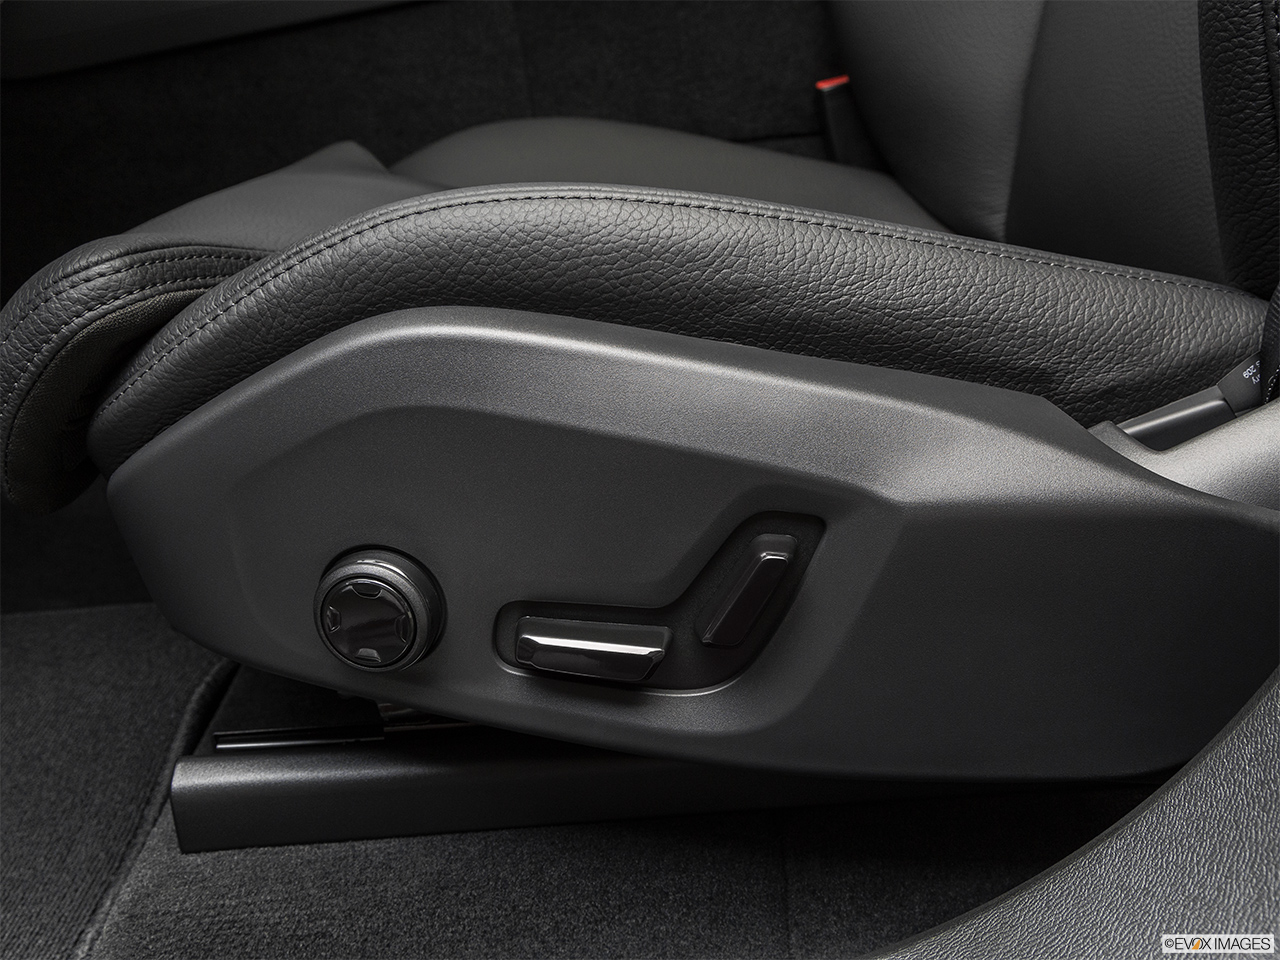 2019 Volvo XC60 T8 Inscription eAWD Plug-in Hybrid Seat Adjustment Controllers. 